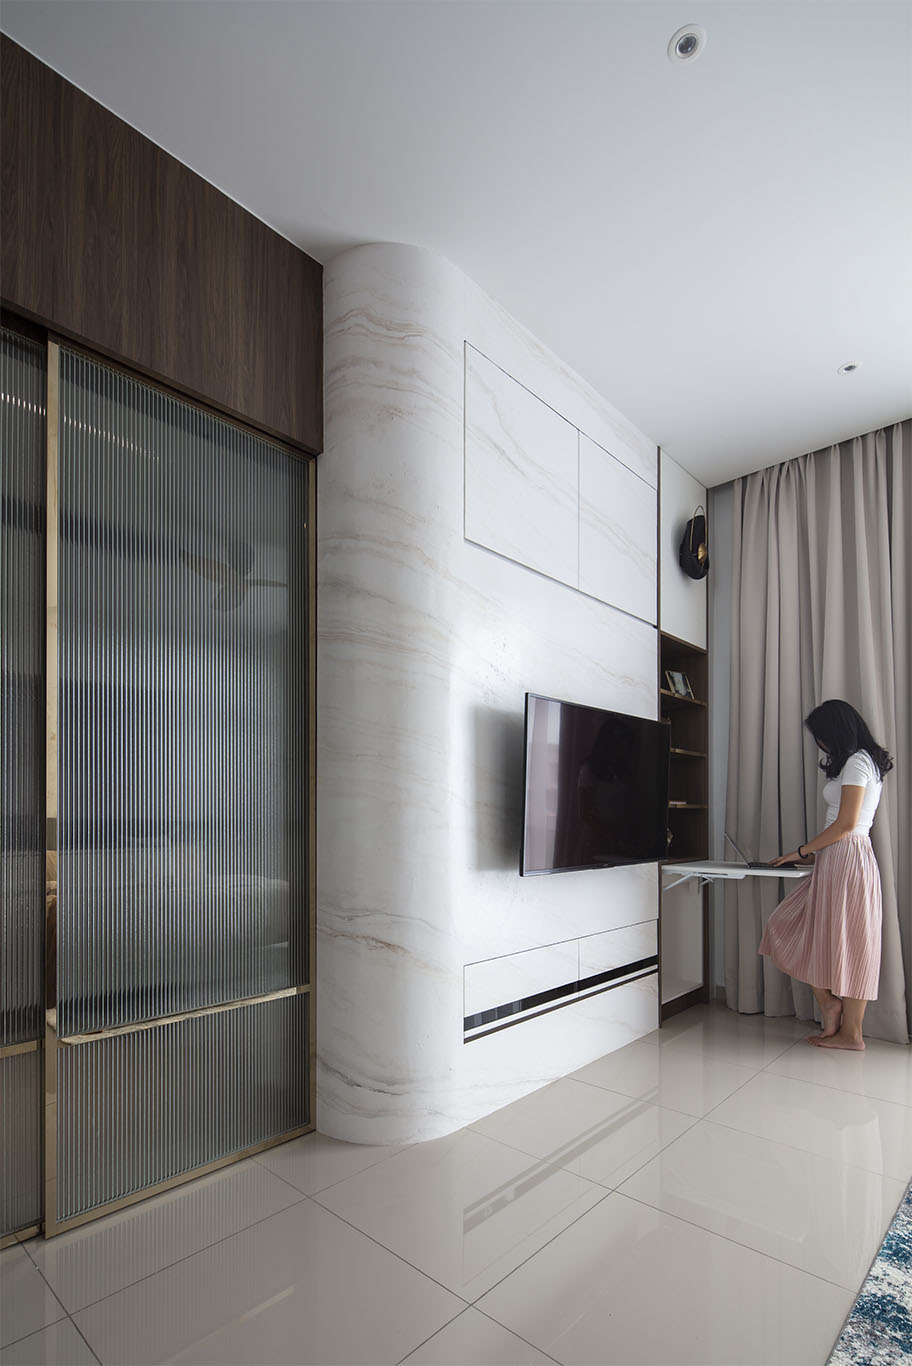 Grande Rhapsody hanging tv in bedroom Mieux interior design